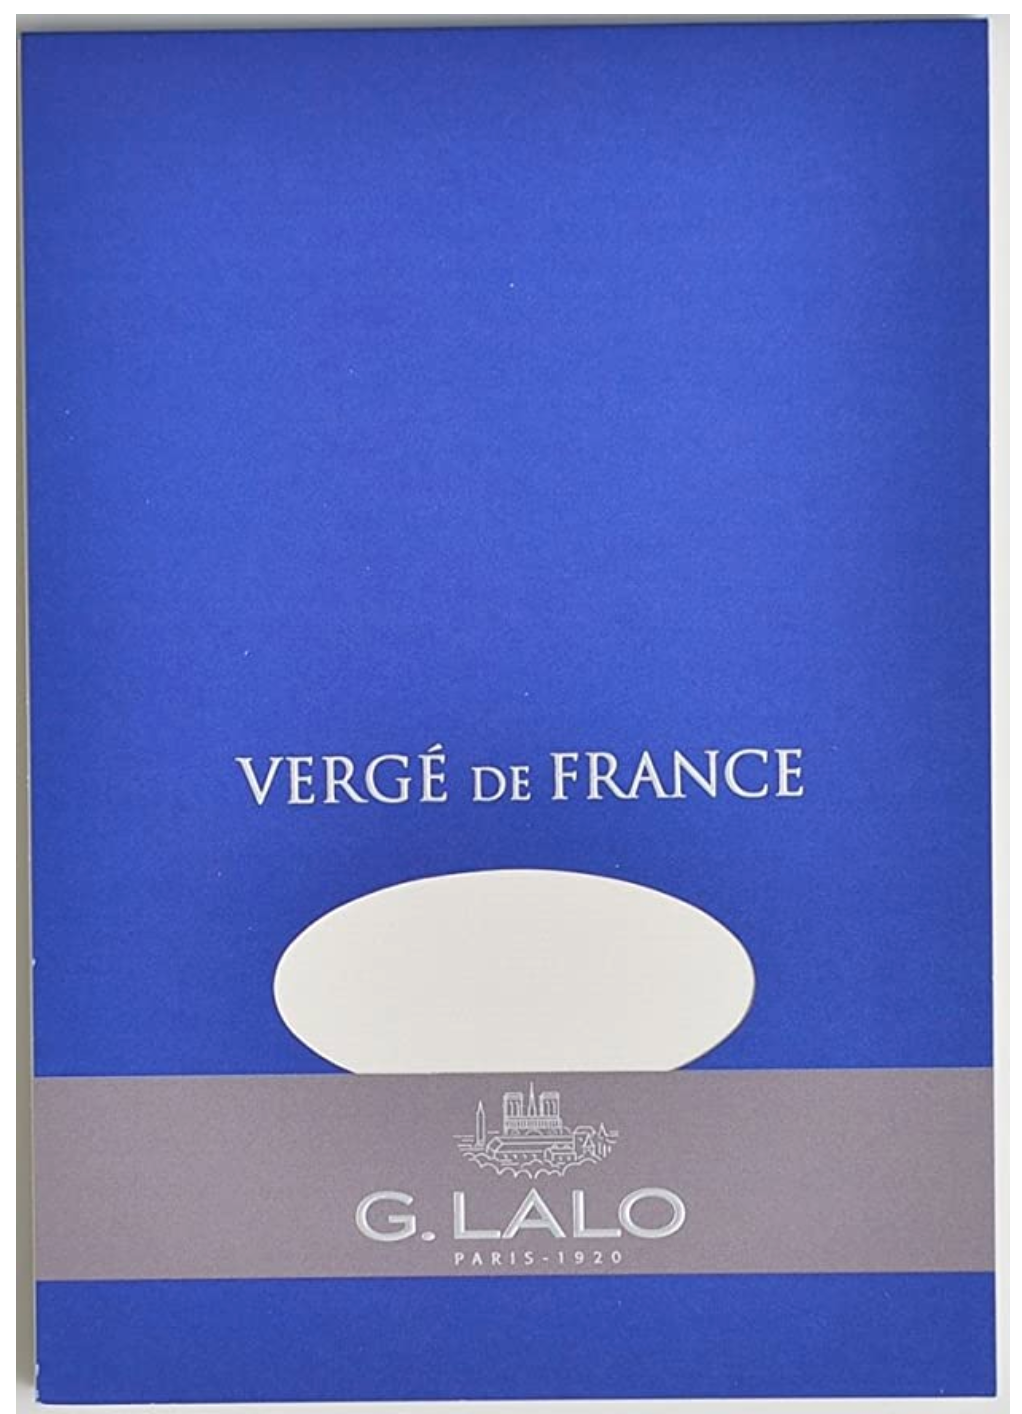 G. Lalo Verge de France - Writing Sheet Tablet